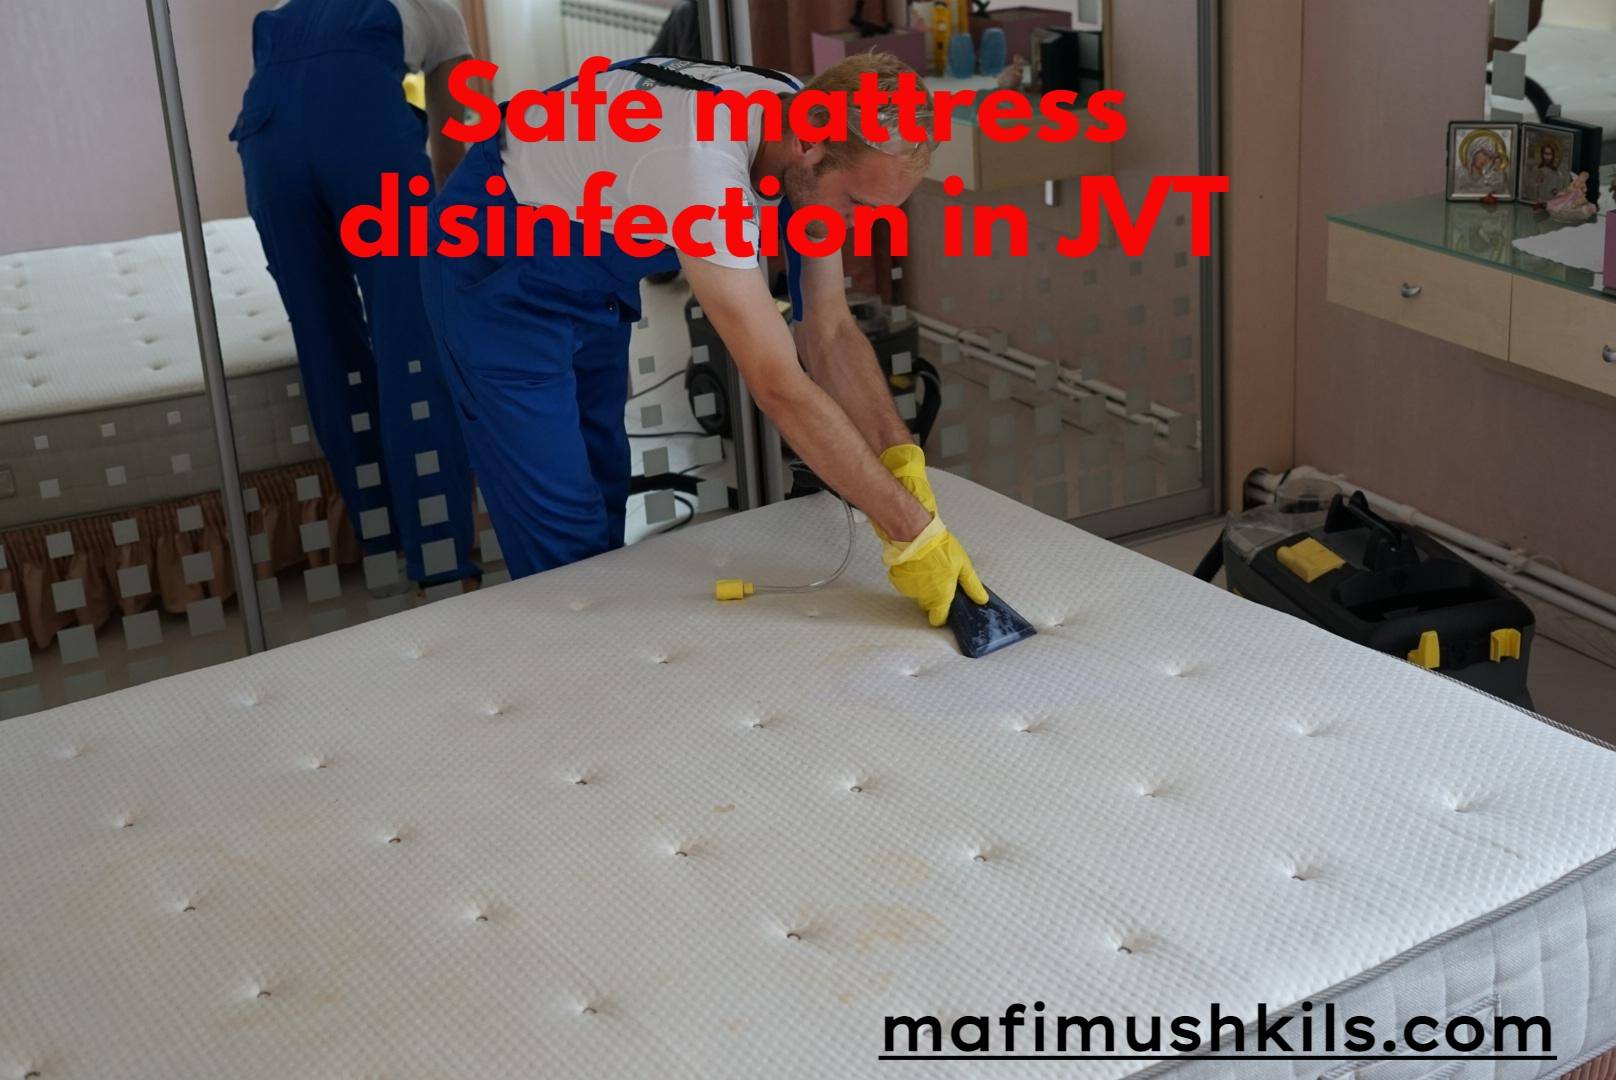 Safe mattress disinfection in JVT